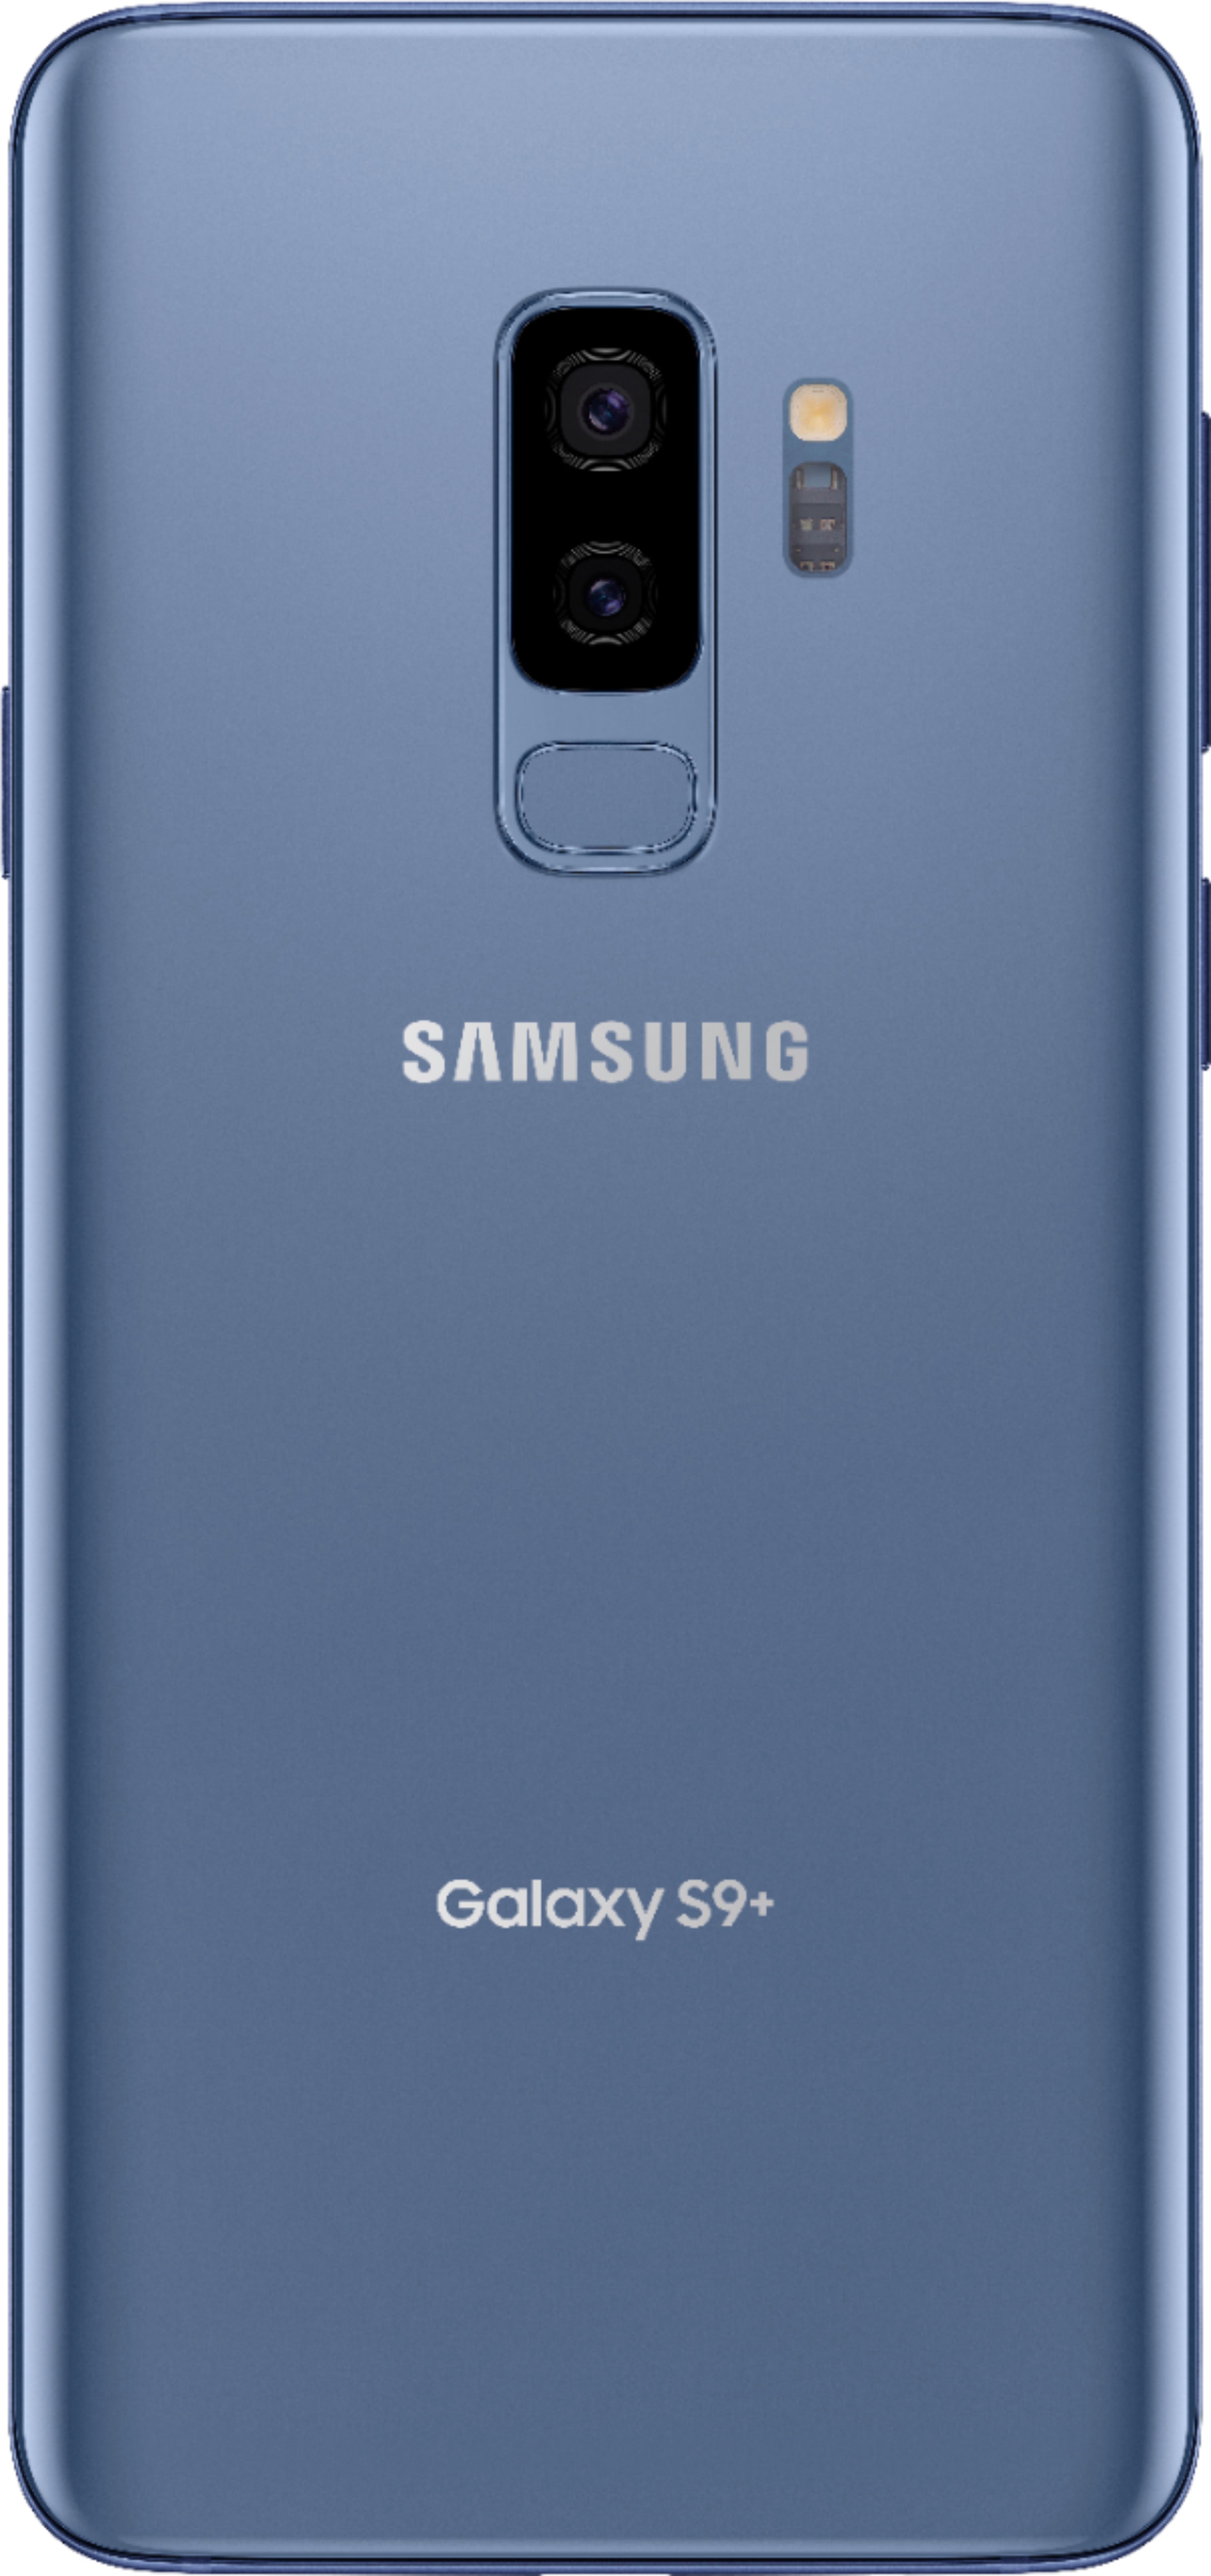 Back View: SaharaCase - ZeroDamage Screen Protector for Samsung Galaxy S8 - Clear